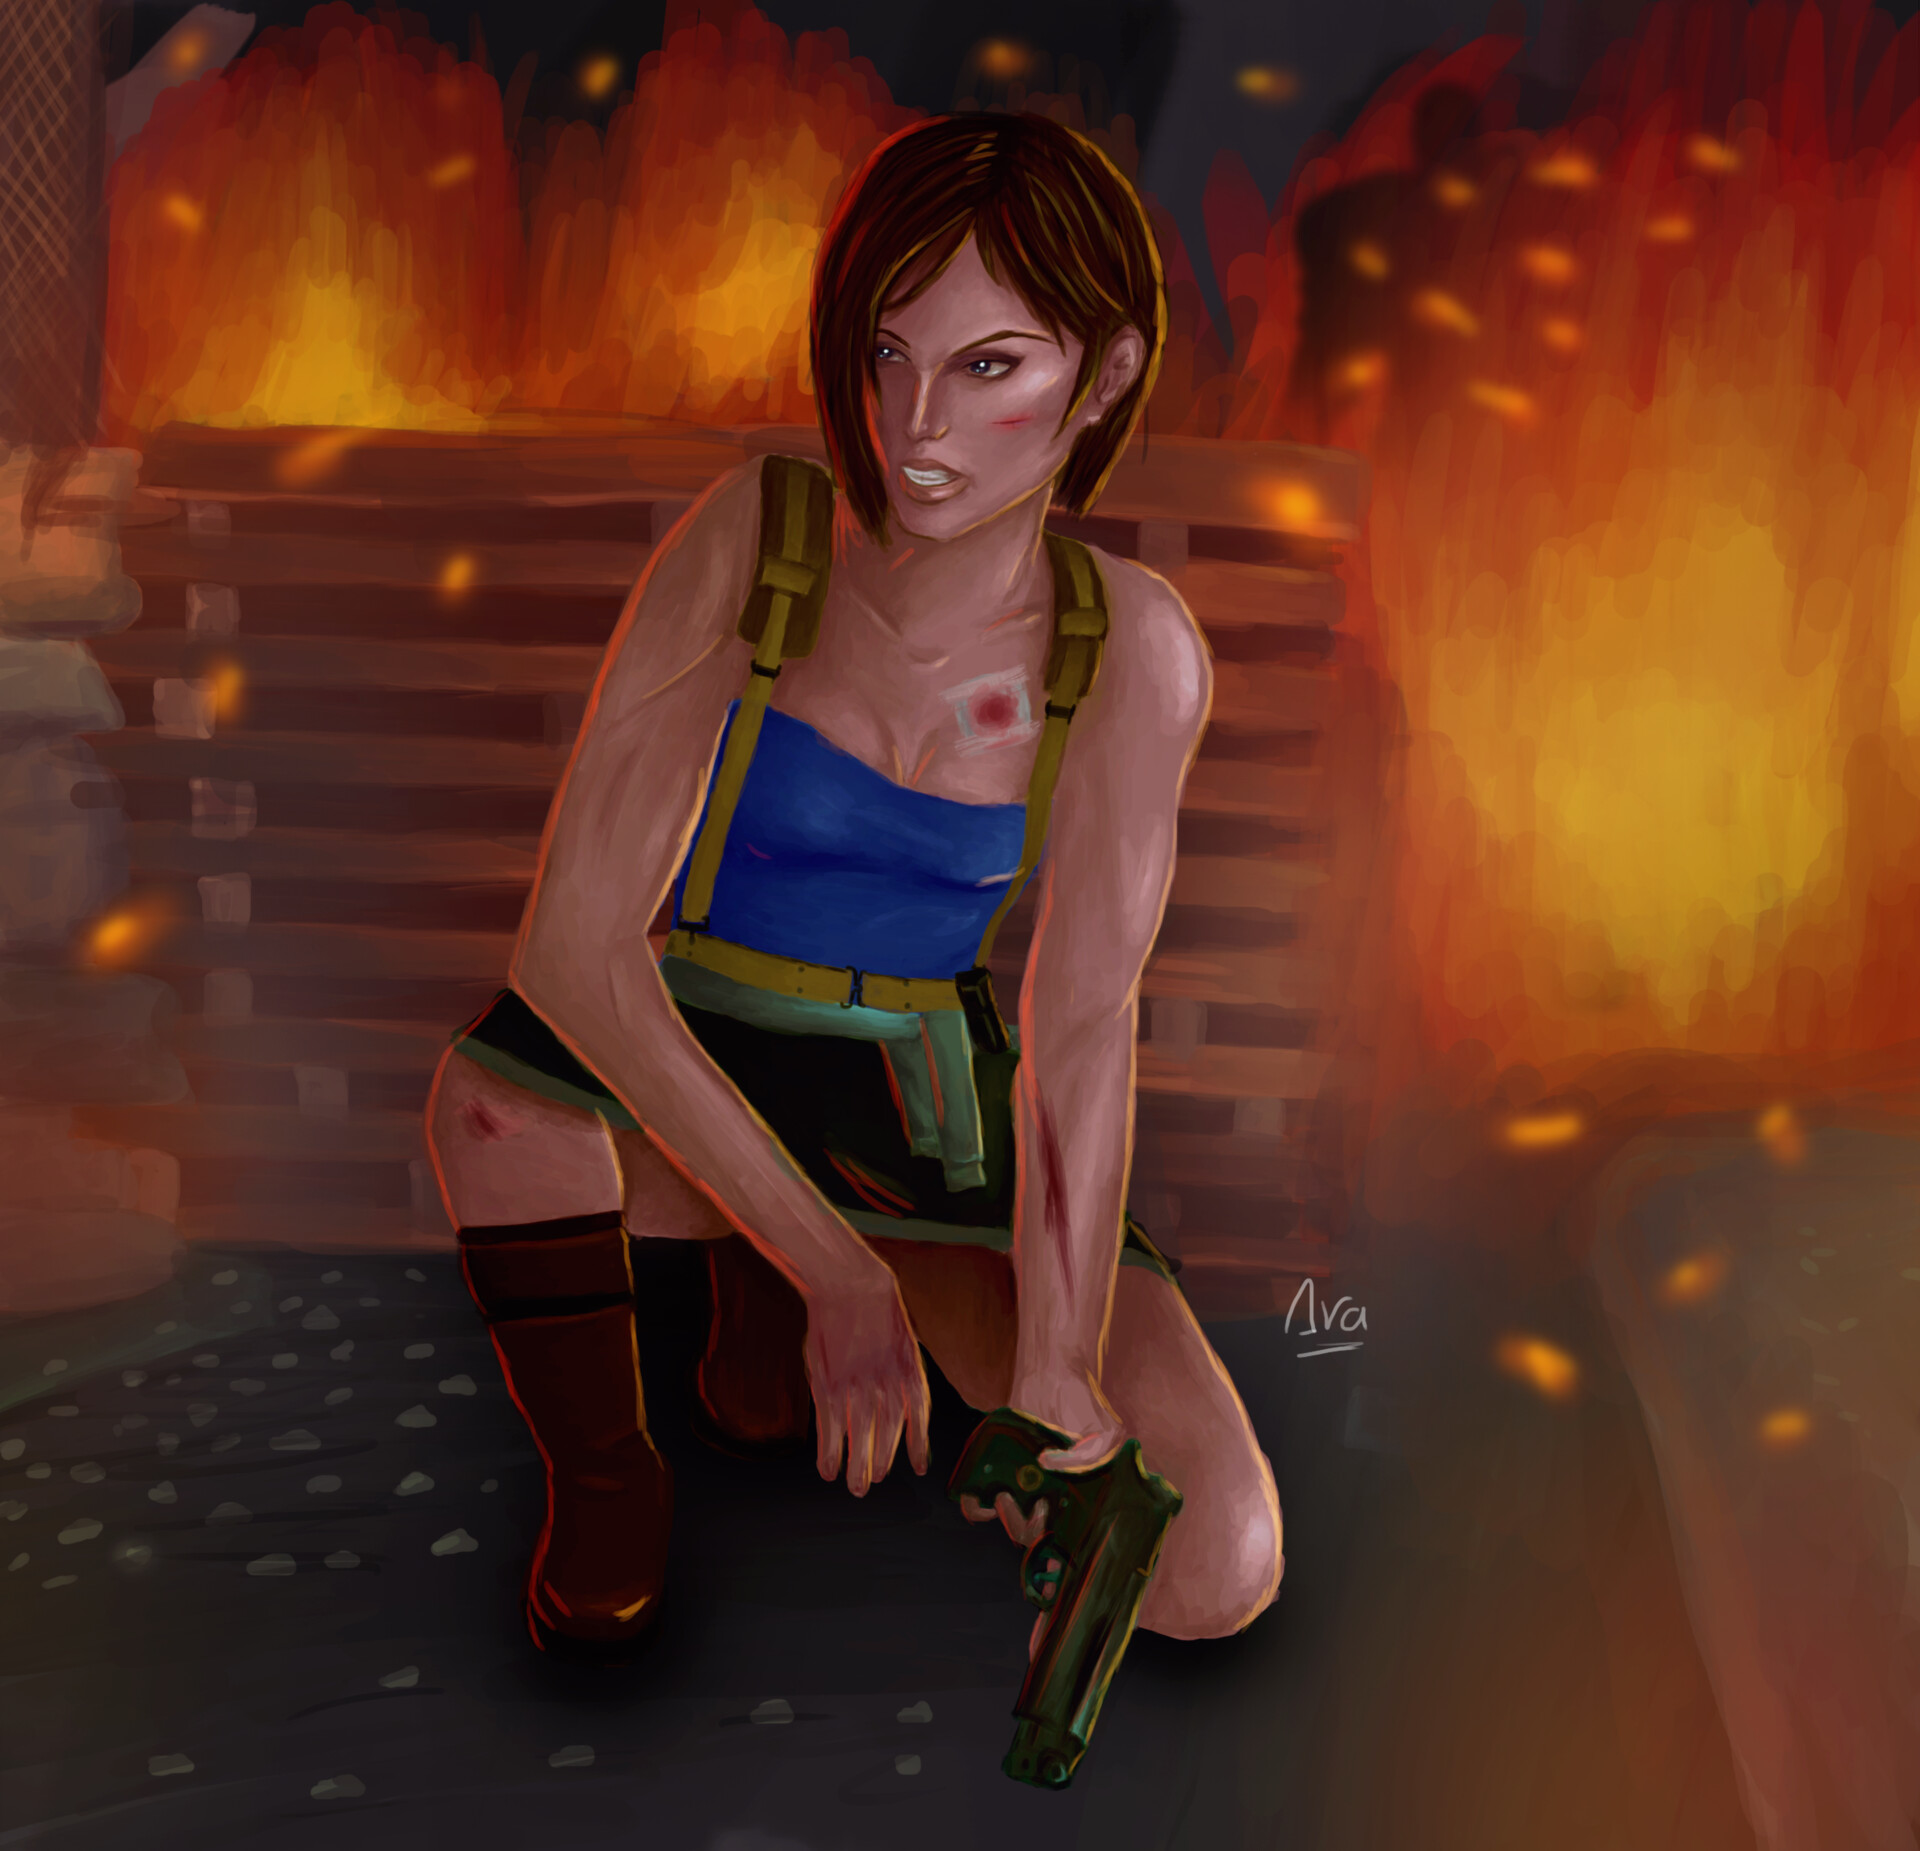 ArtStation - Resident Evil 3 Jill Valentine